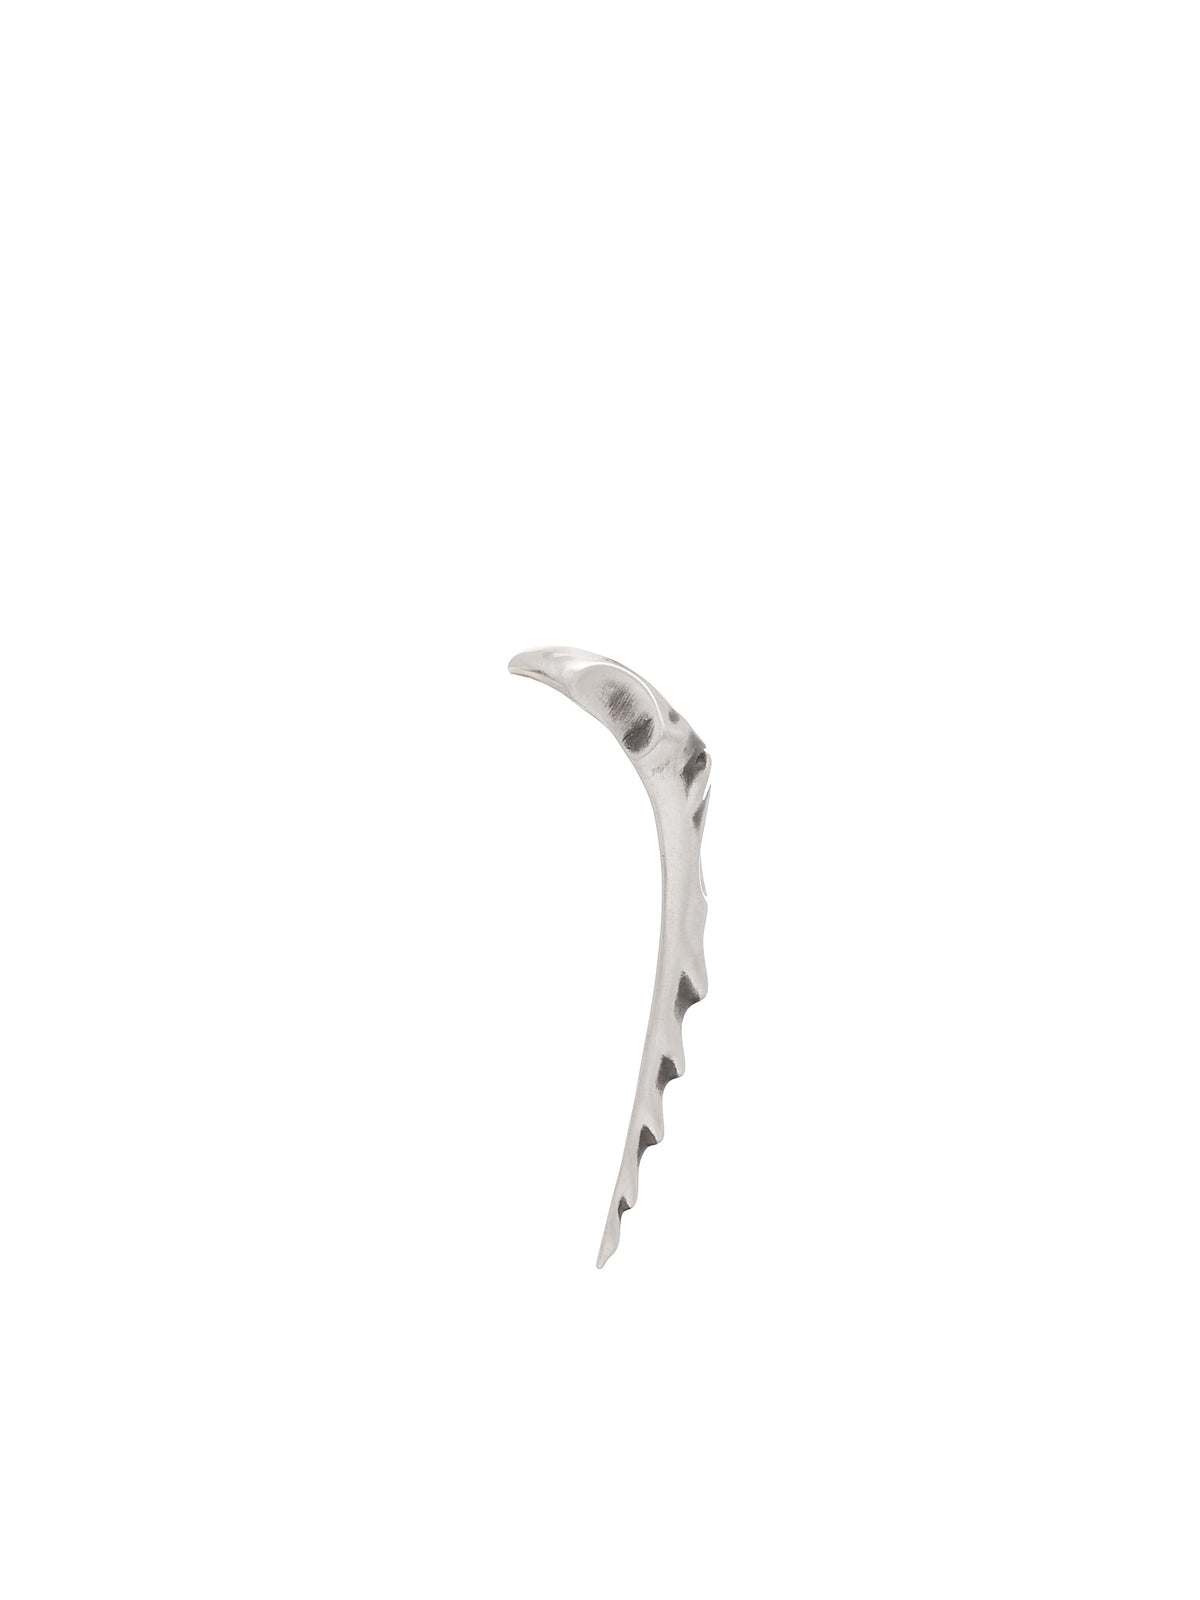 Ash Silver Claw Ring (RSS23AC01A-ASH-SILVER)